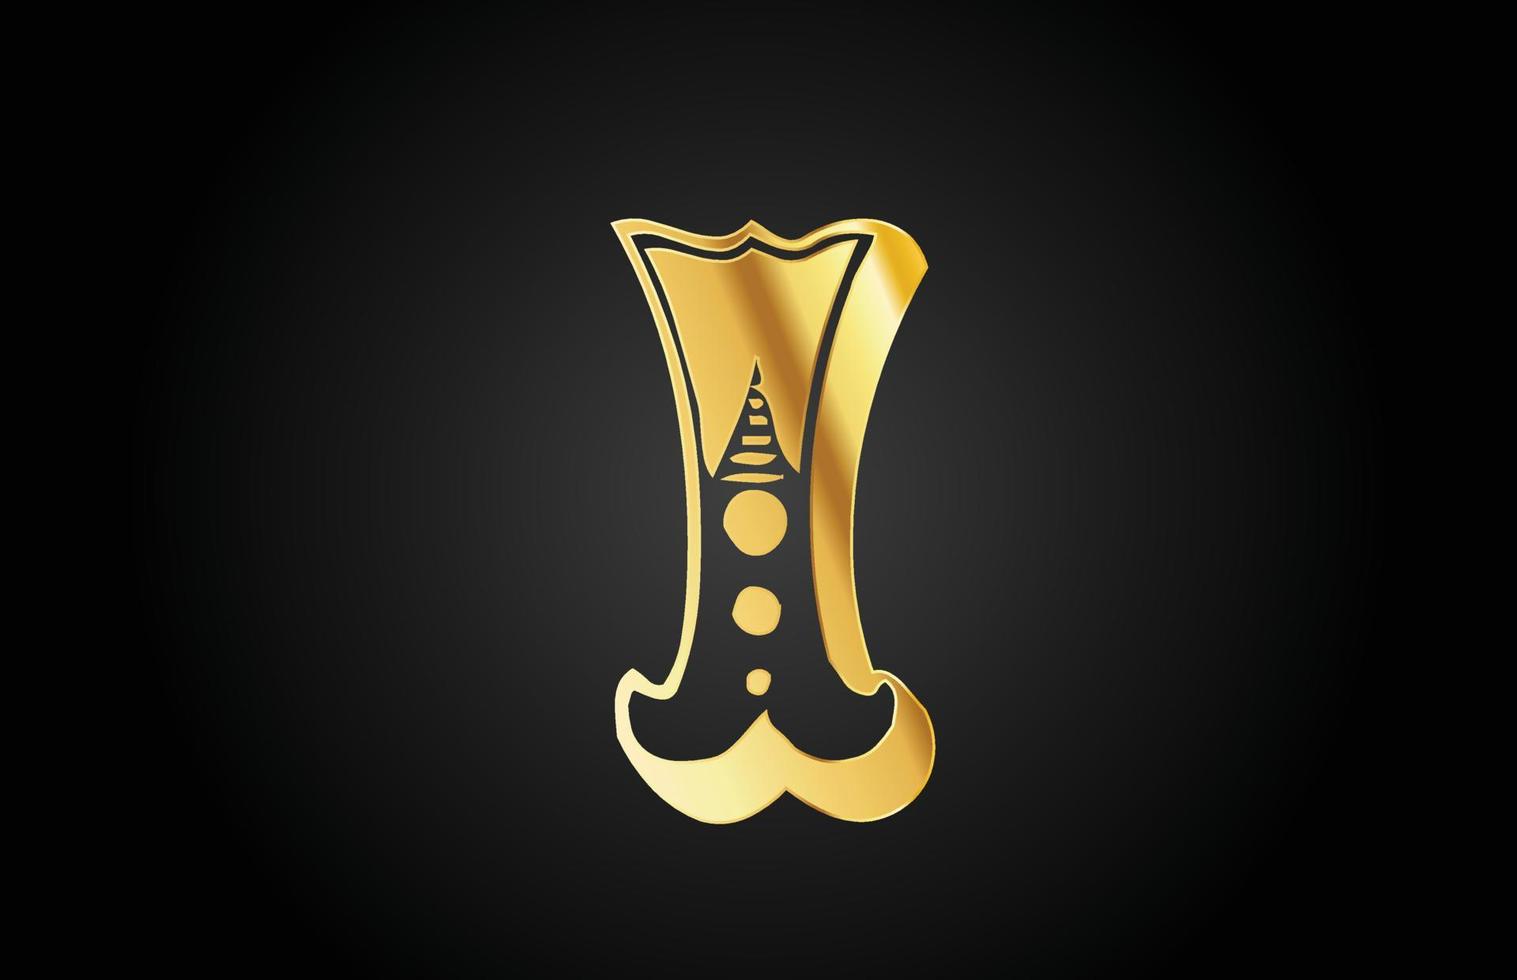 golden vintage I metal alphabet letter logo icon. Creative design template for company or business vector